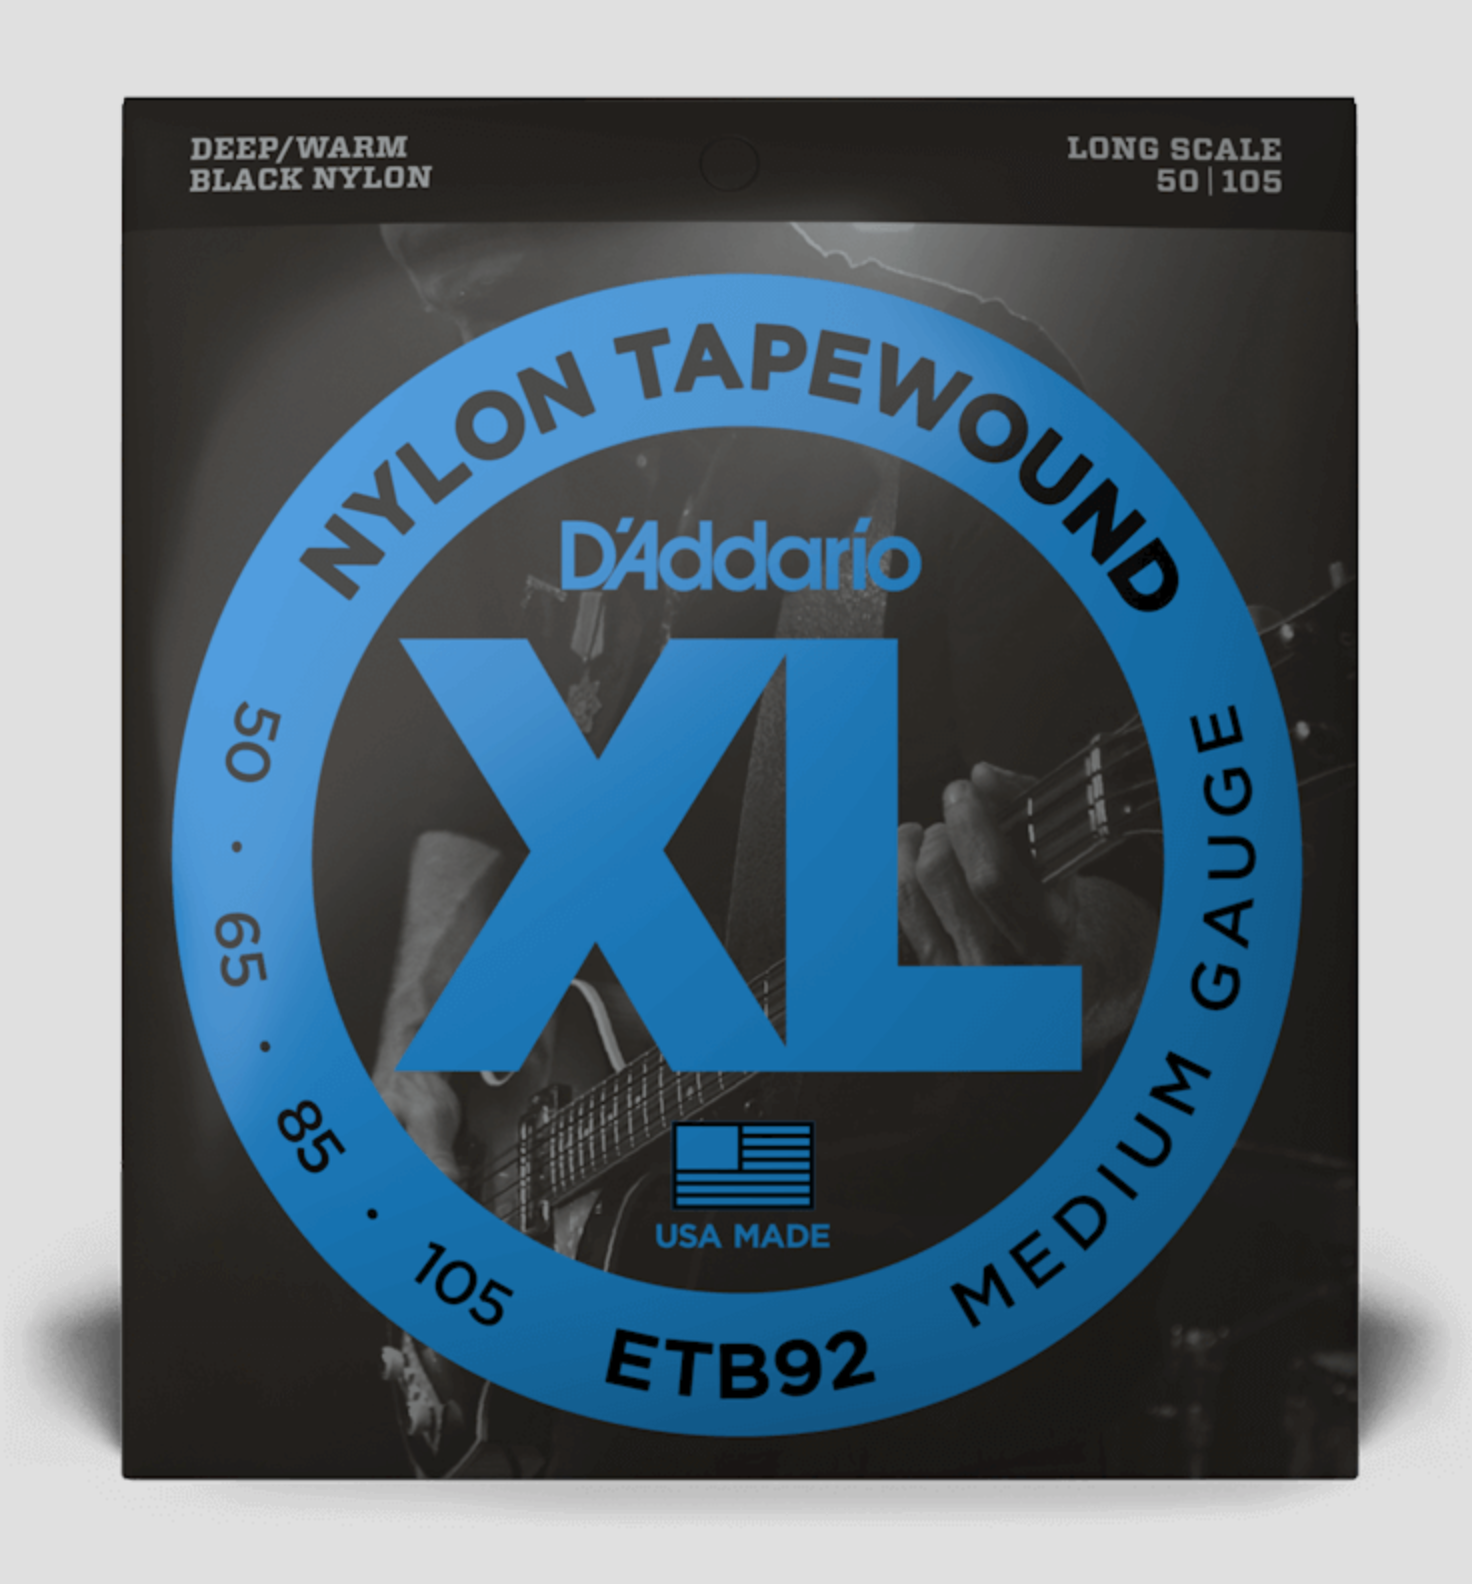 D'Addario D'Addario XL 50-105 Bass Strings, Nylon Tapewound, Long Scale, Medium